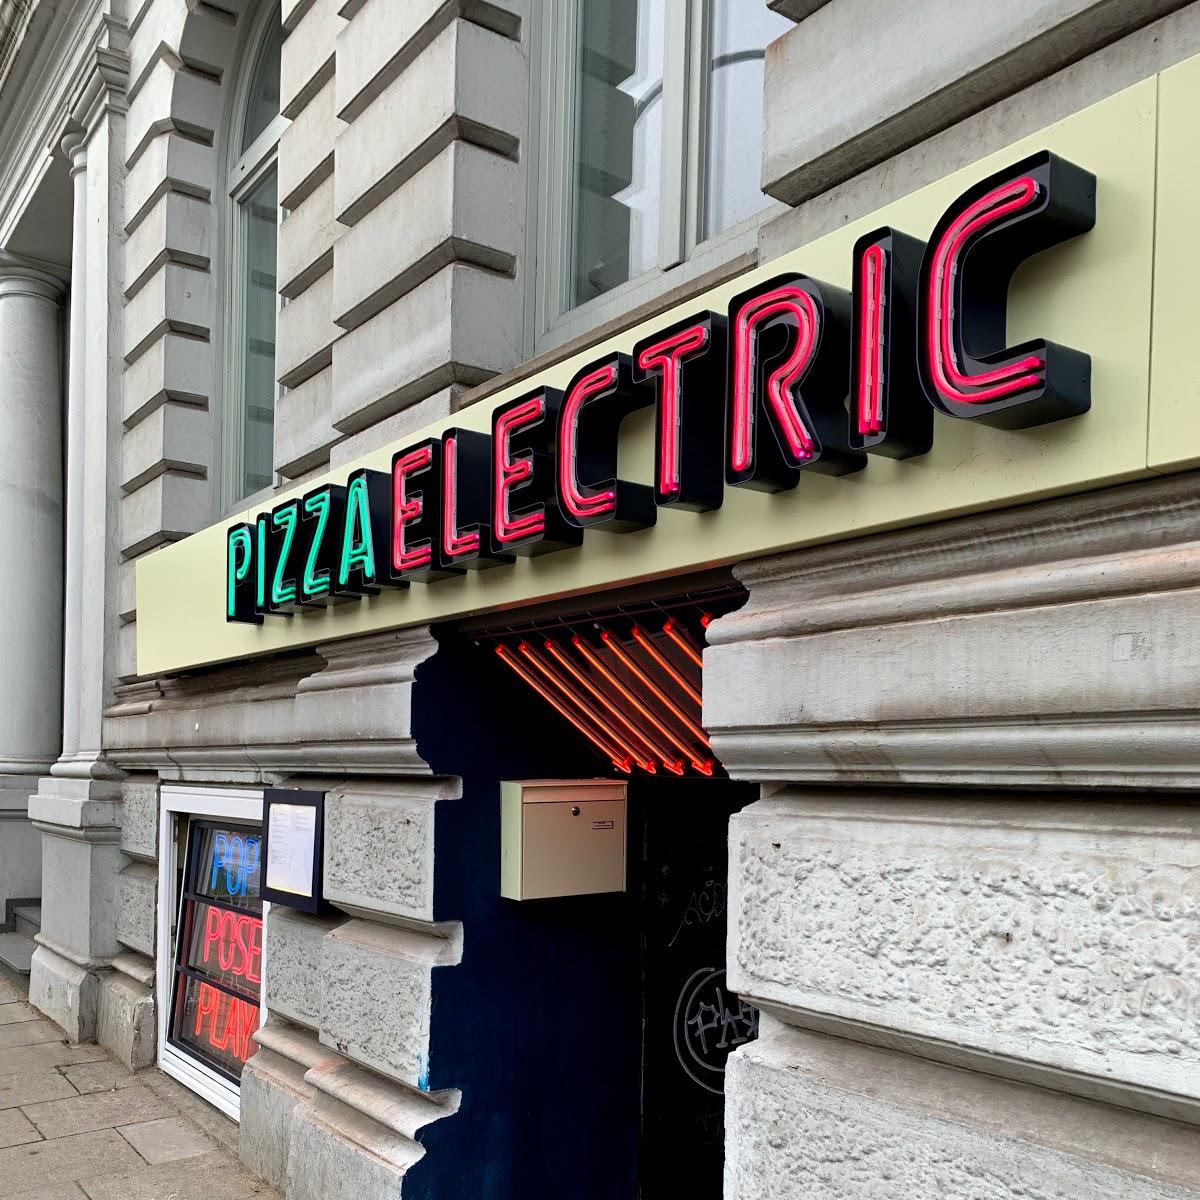 Restaurant "Pizza Electric" in Hamburg